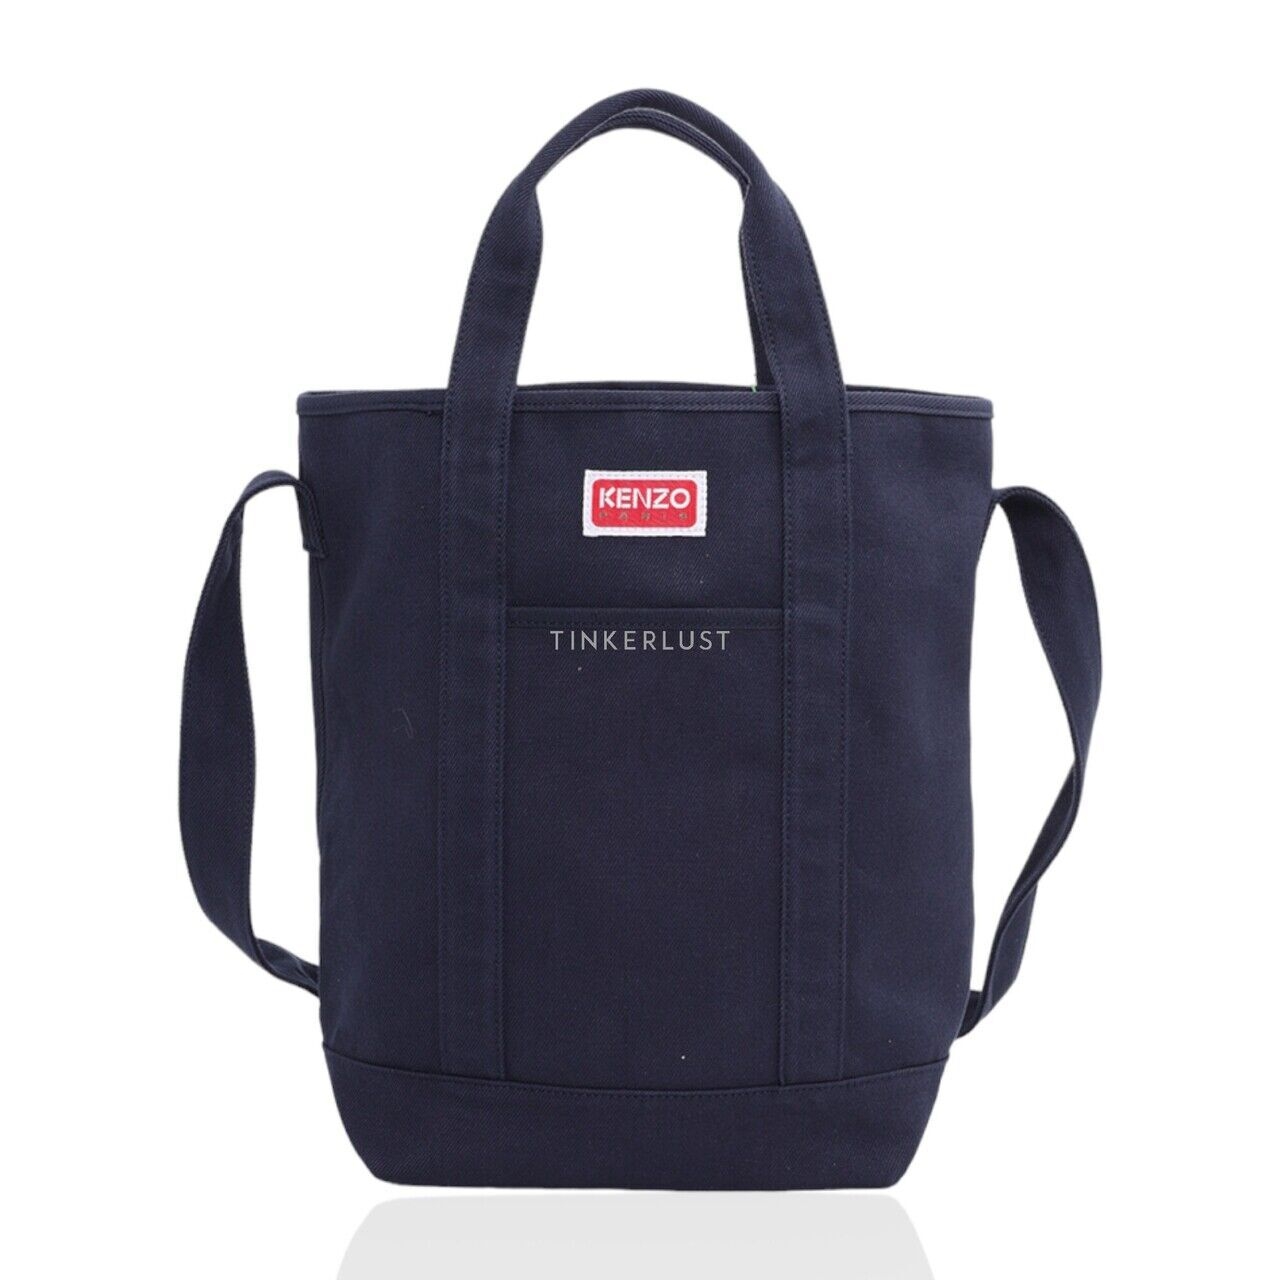 Kenzo Men Kenzo Poppy Tote Bag in Navy Blue with Adjustable Strap Satchel